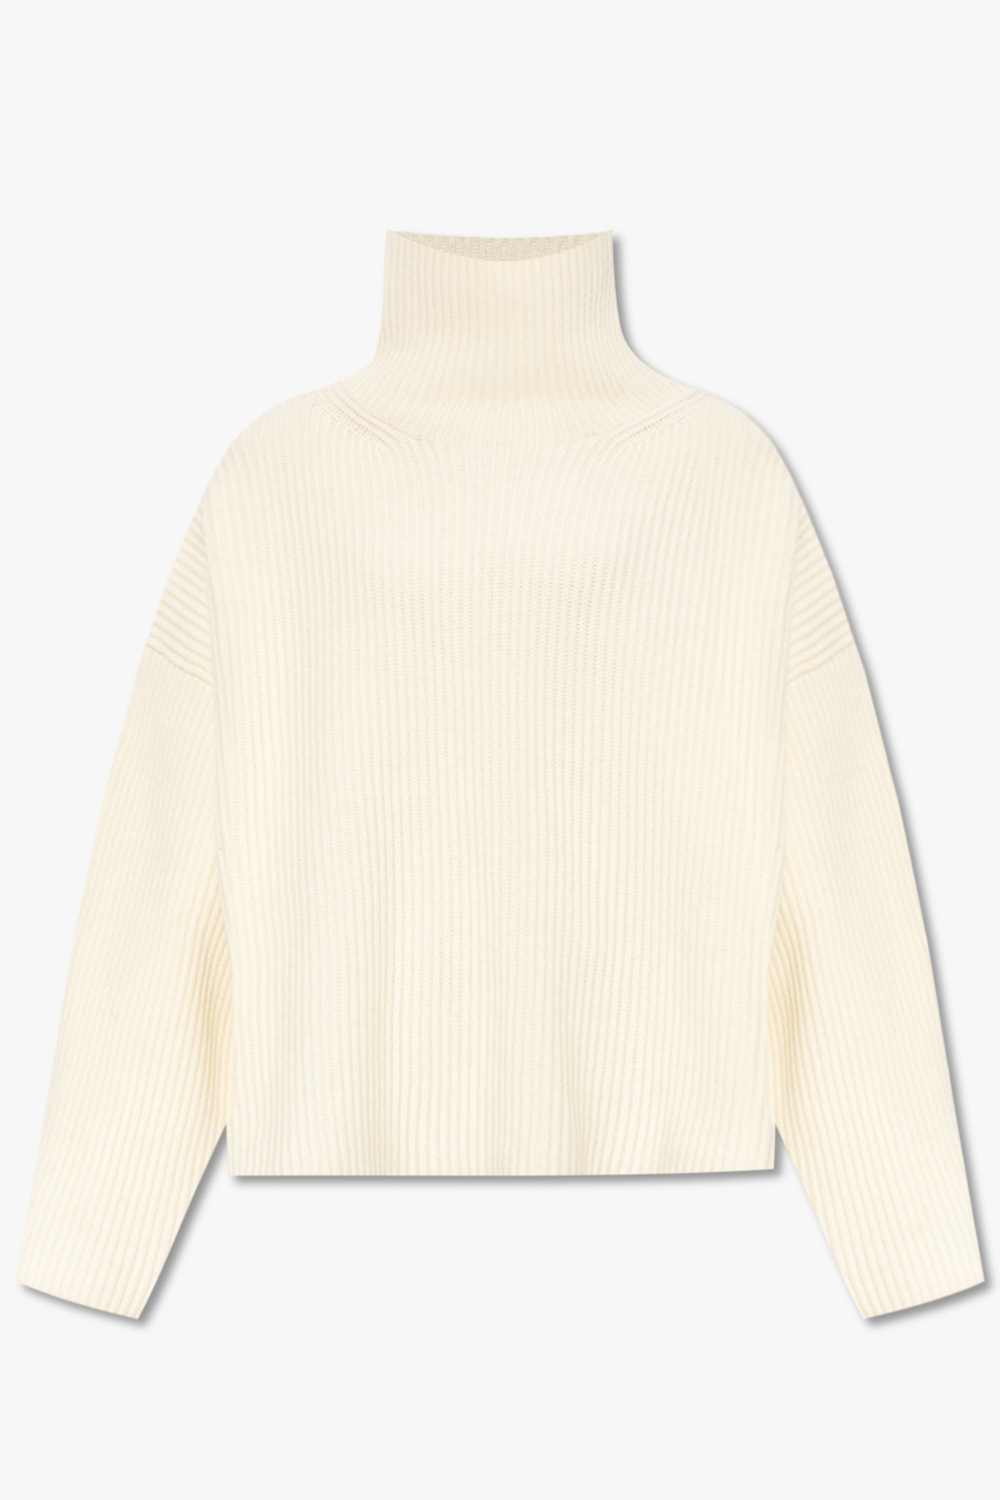 TOTEME Oversize turtleneck sweater